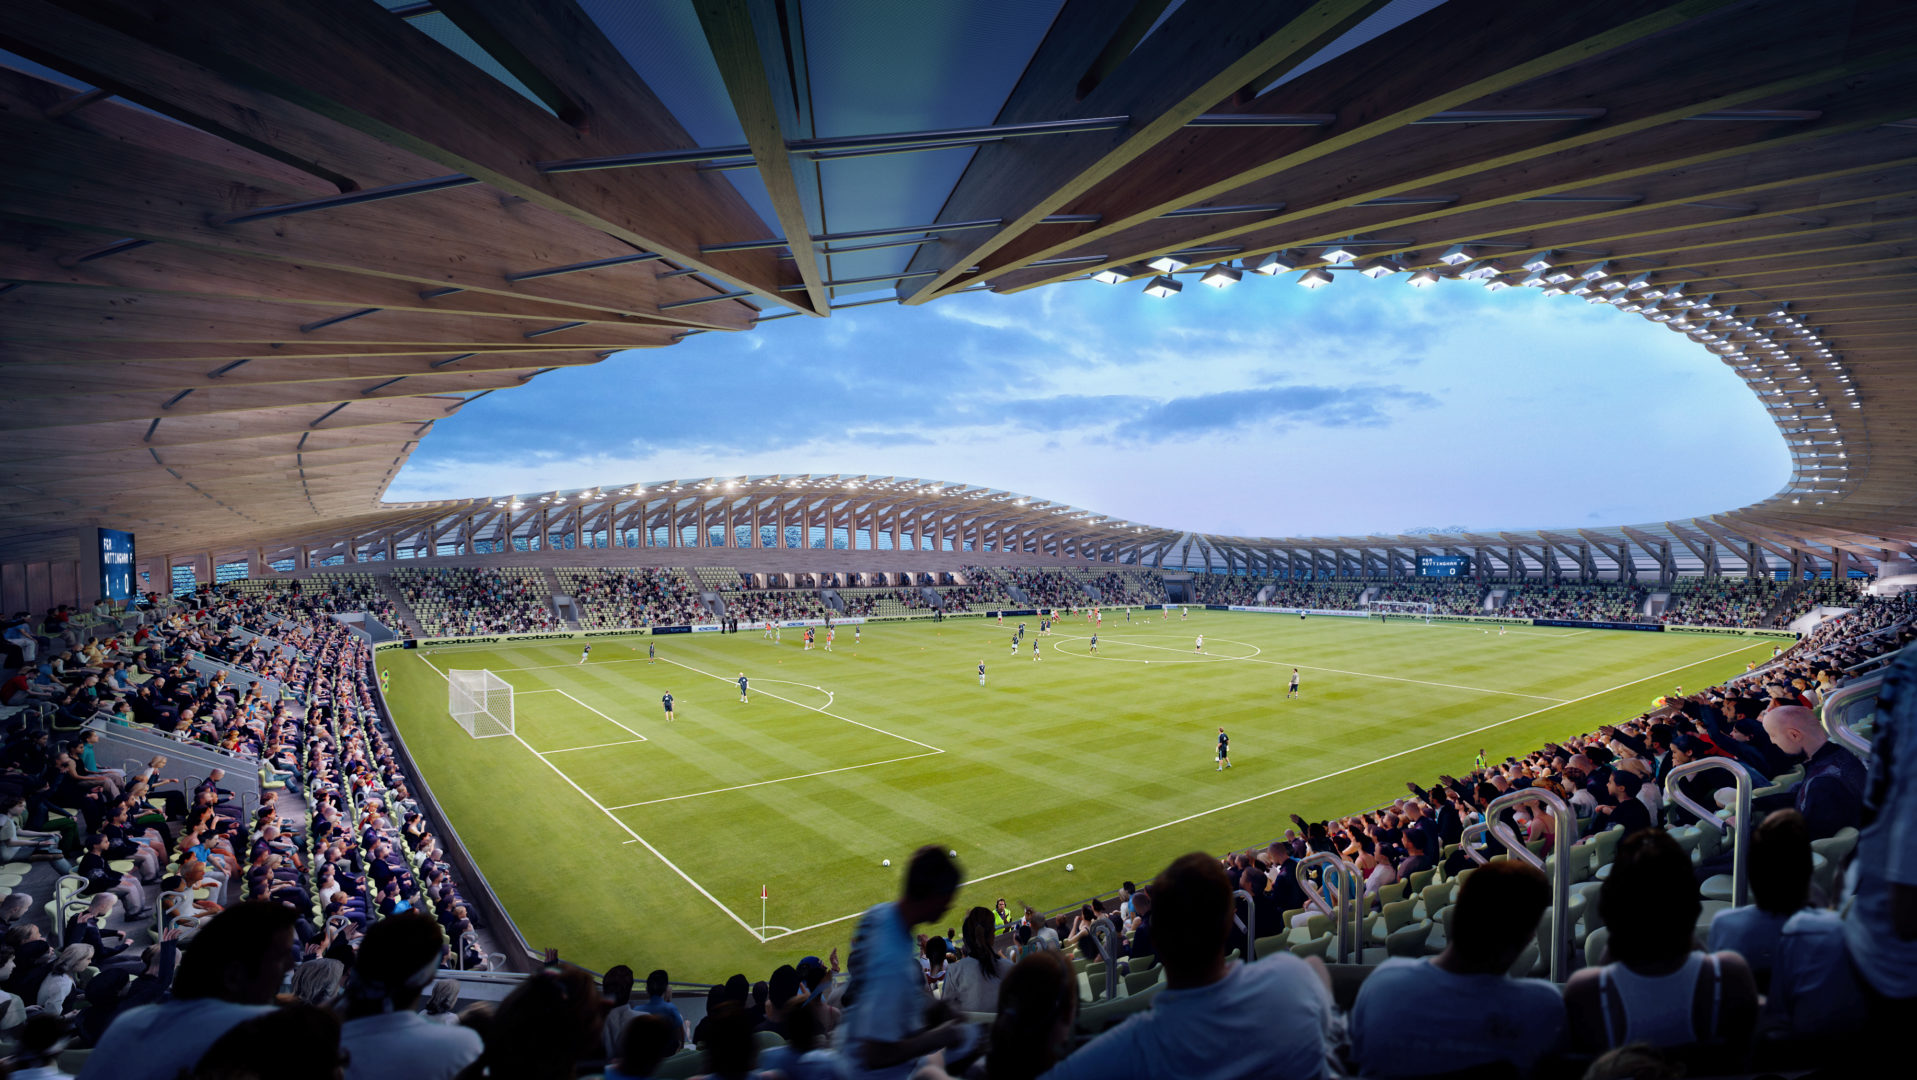 And finally... World's first wooden football stadium edges closer